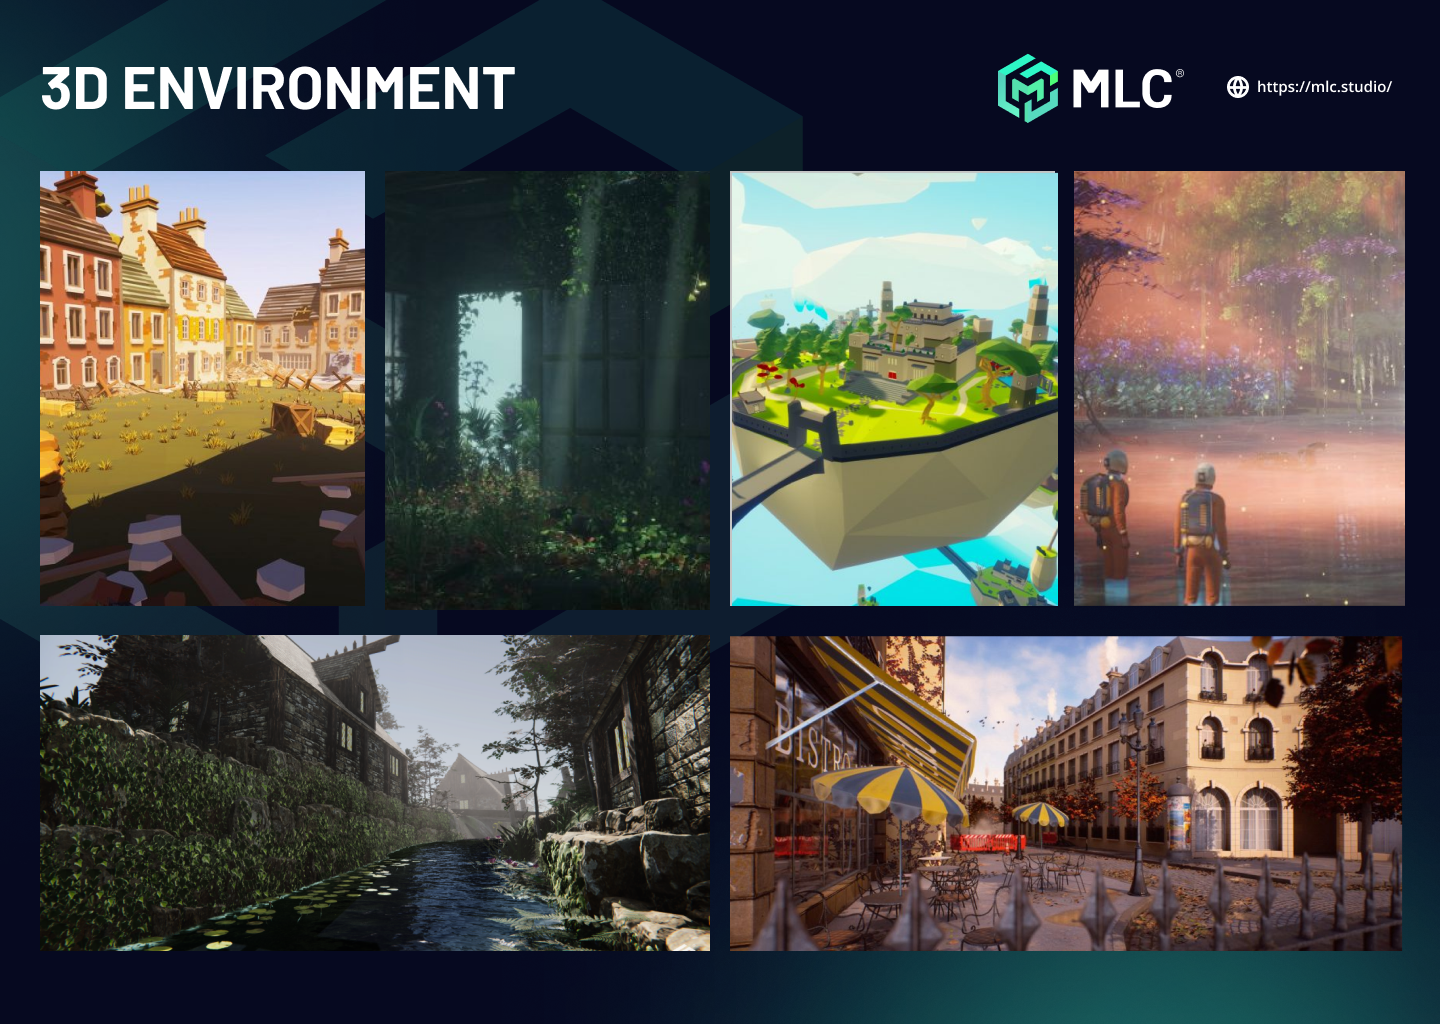 3d environments built by MLC